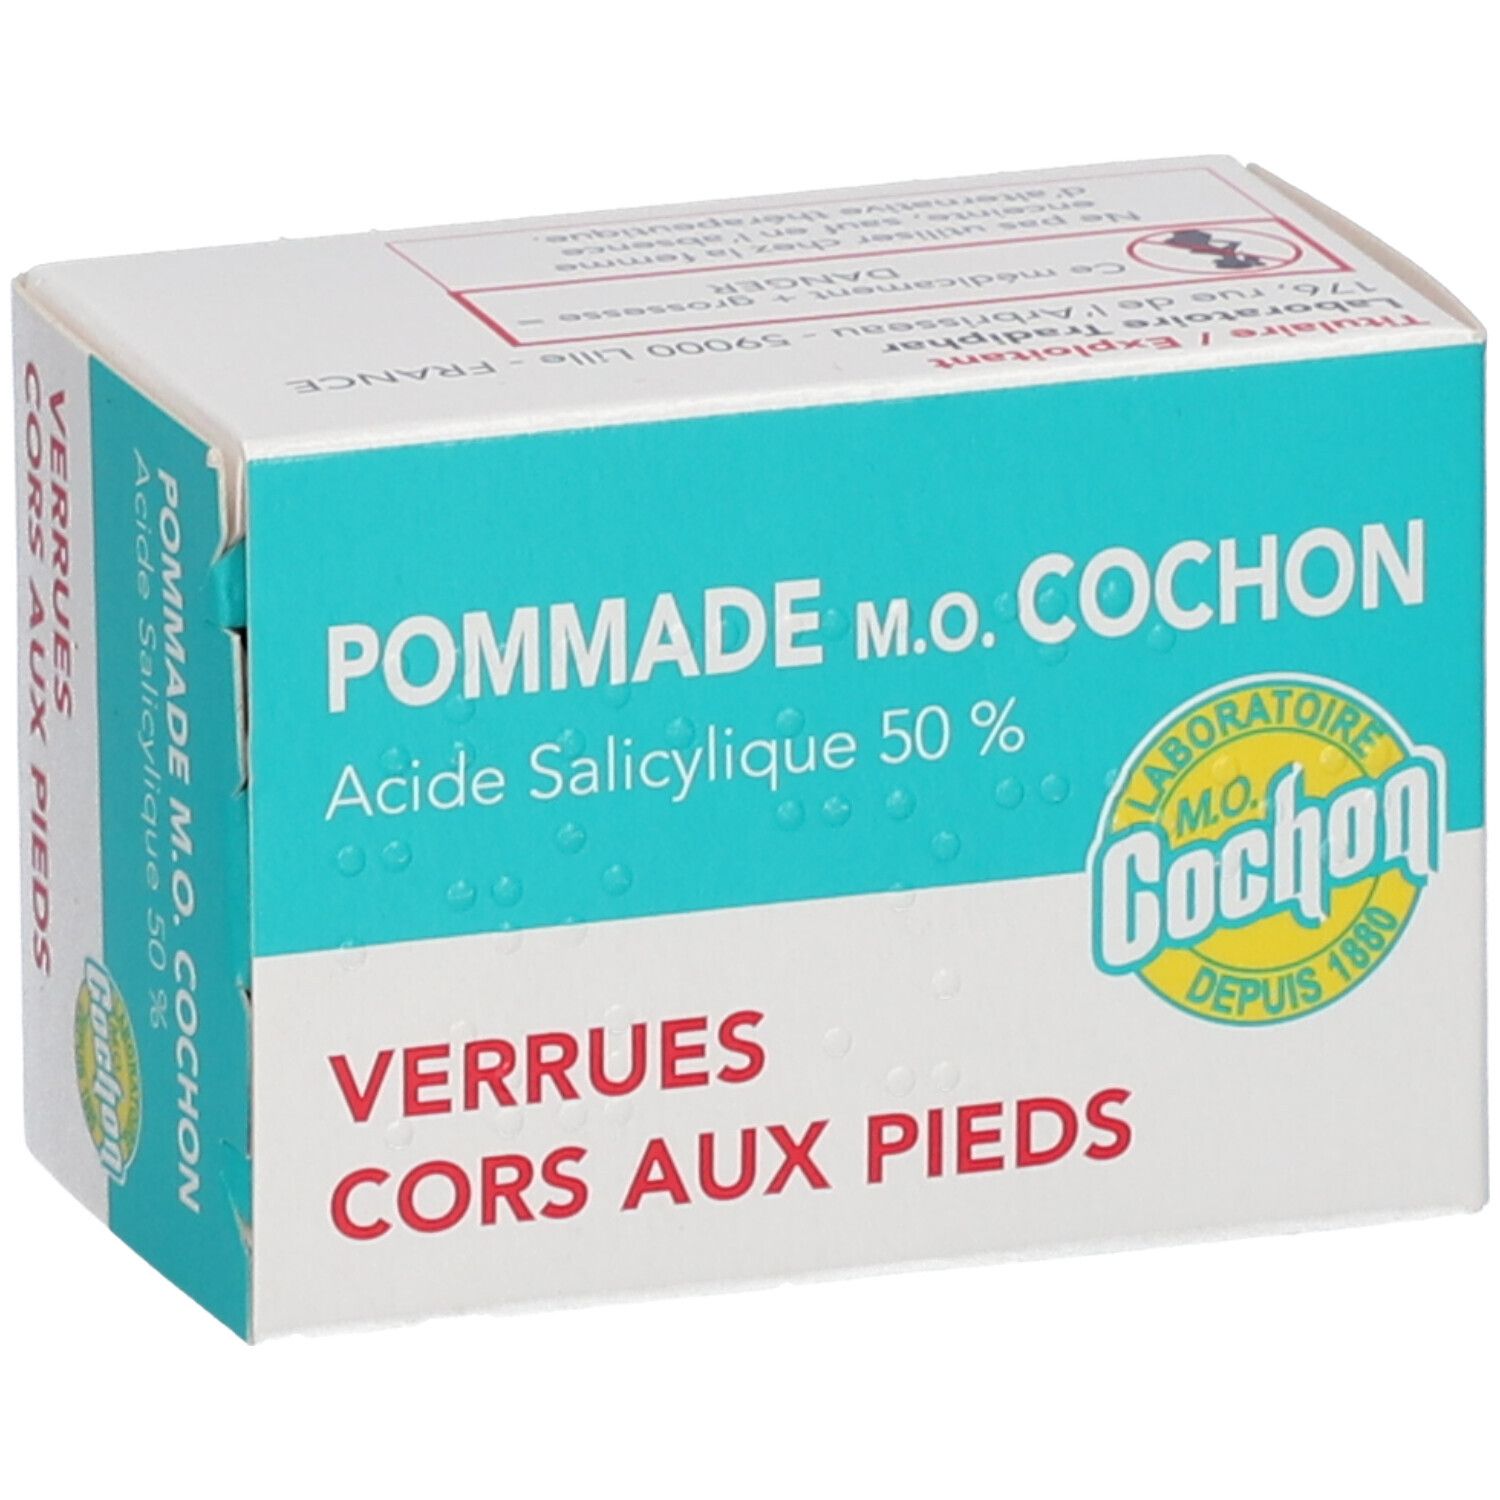 Pommade M.O. Cochon 50 % 1 pot de 10 g - Tradiphar